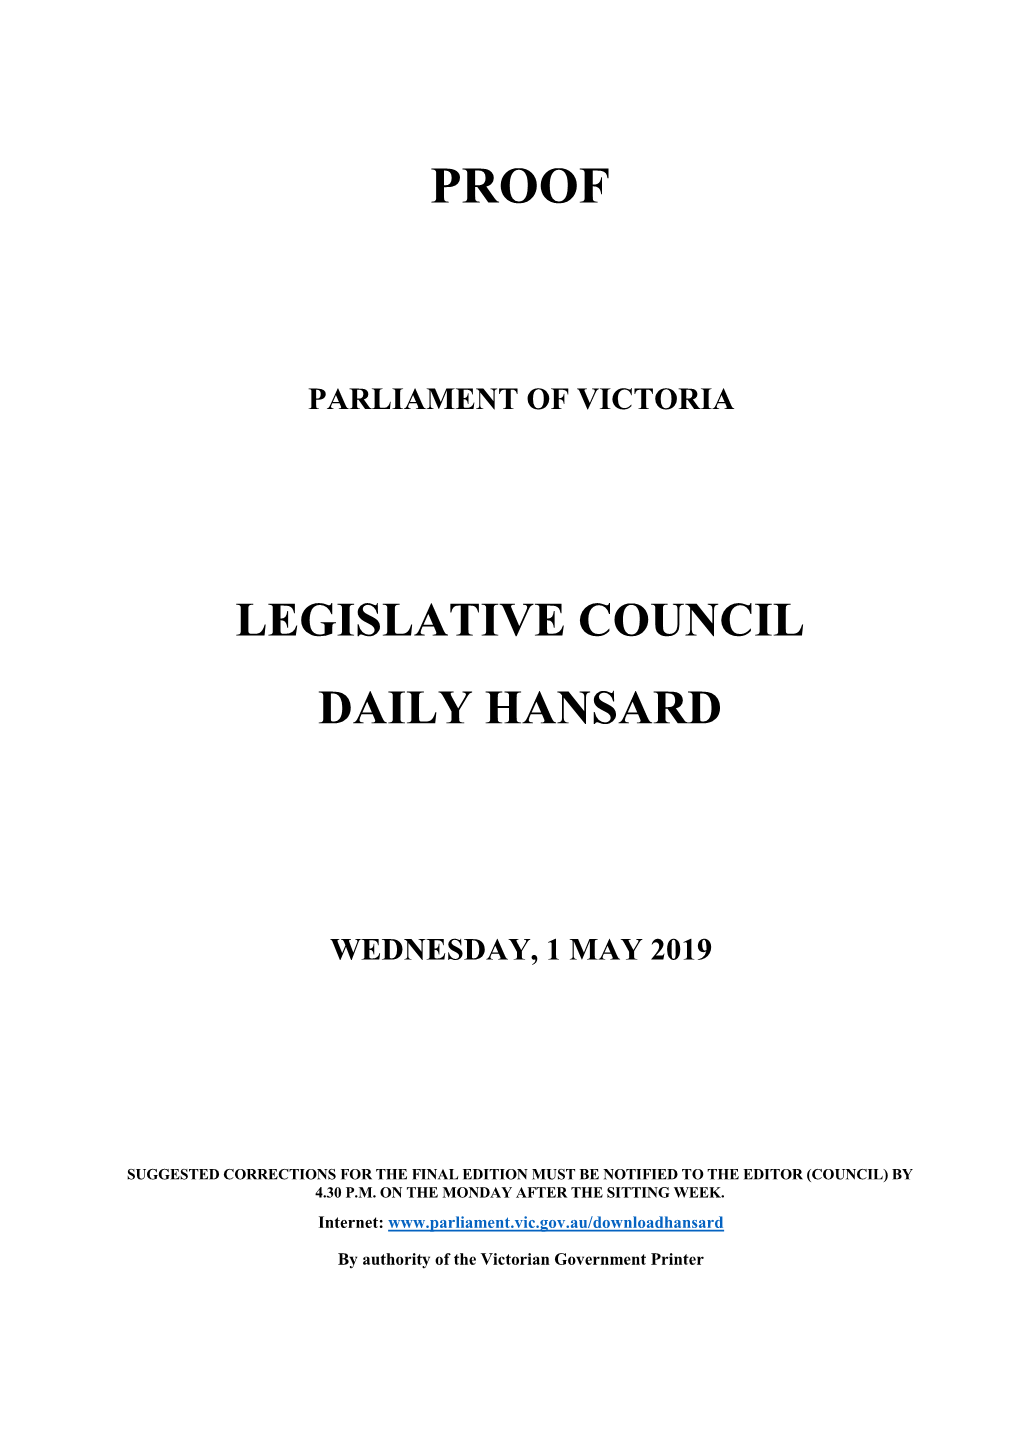 Legislative Council Daily Hansard